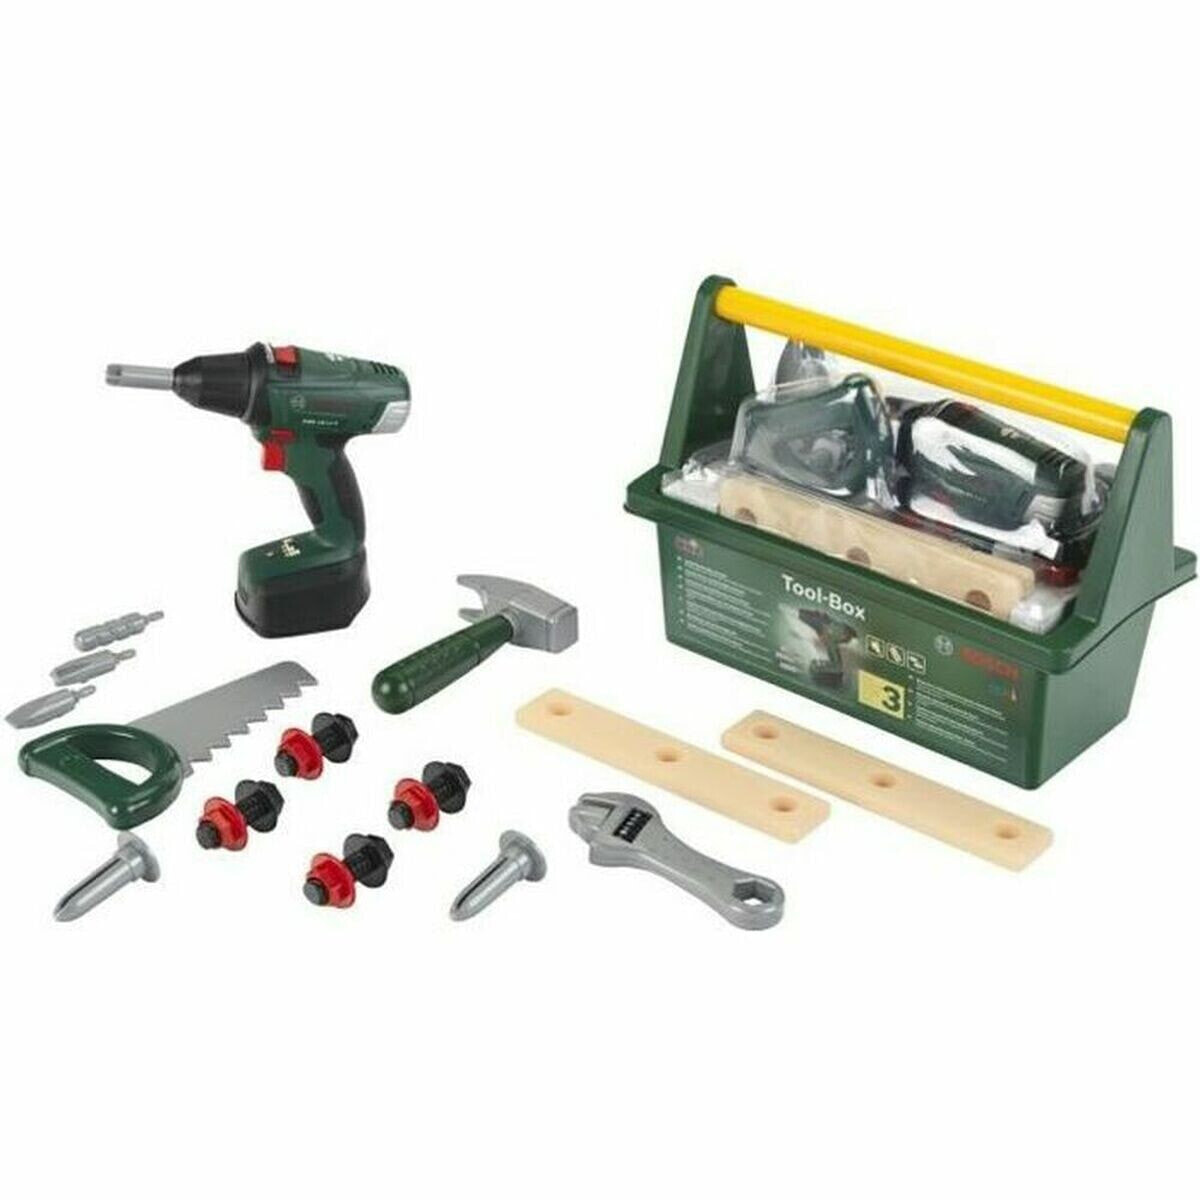 Set of tools for children BOSCH 8520 1 Piece